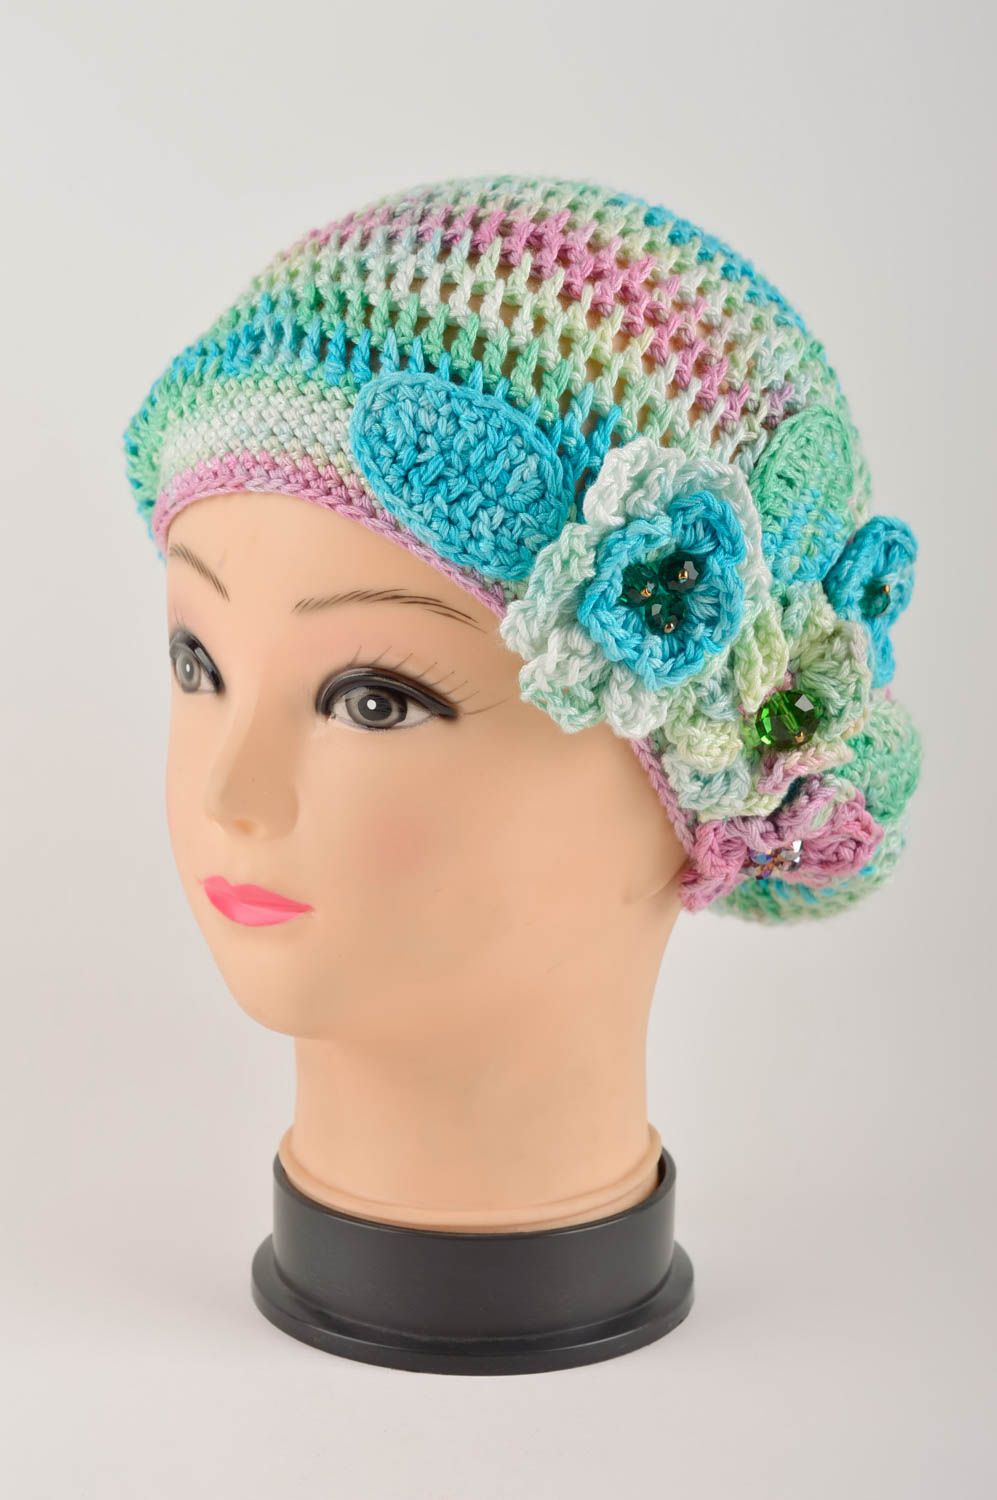 Handmade beret hat crochet beret designer accessories for women gifts for girls photo 2